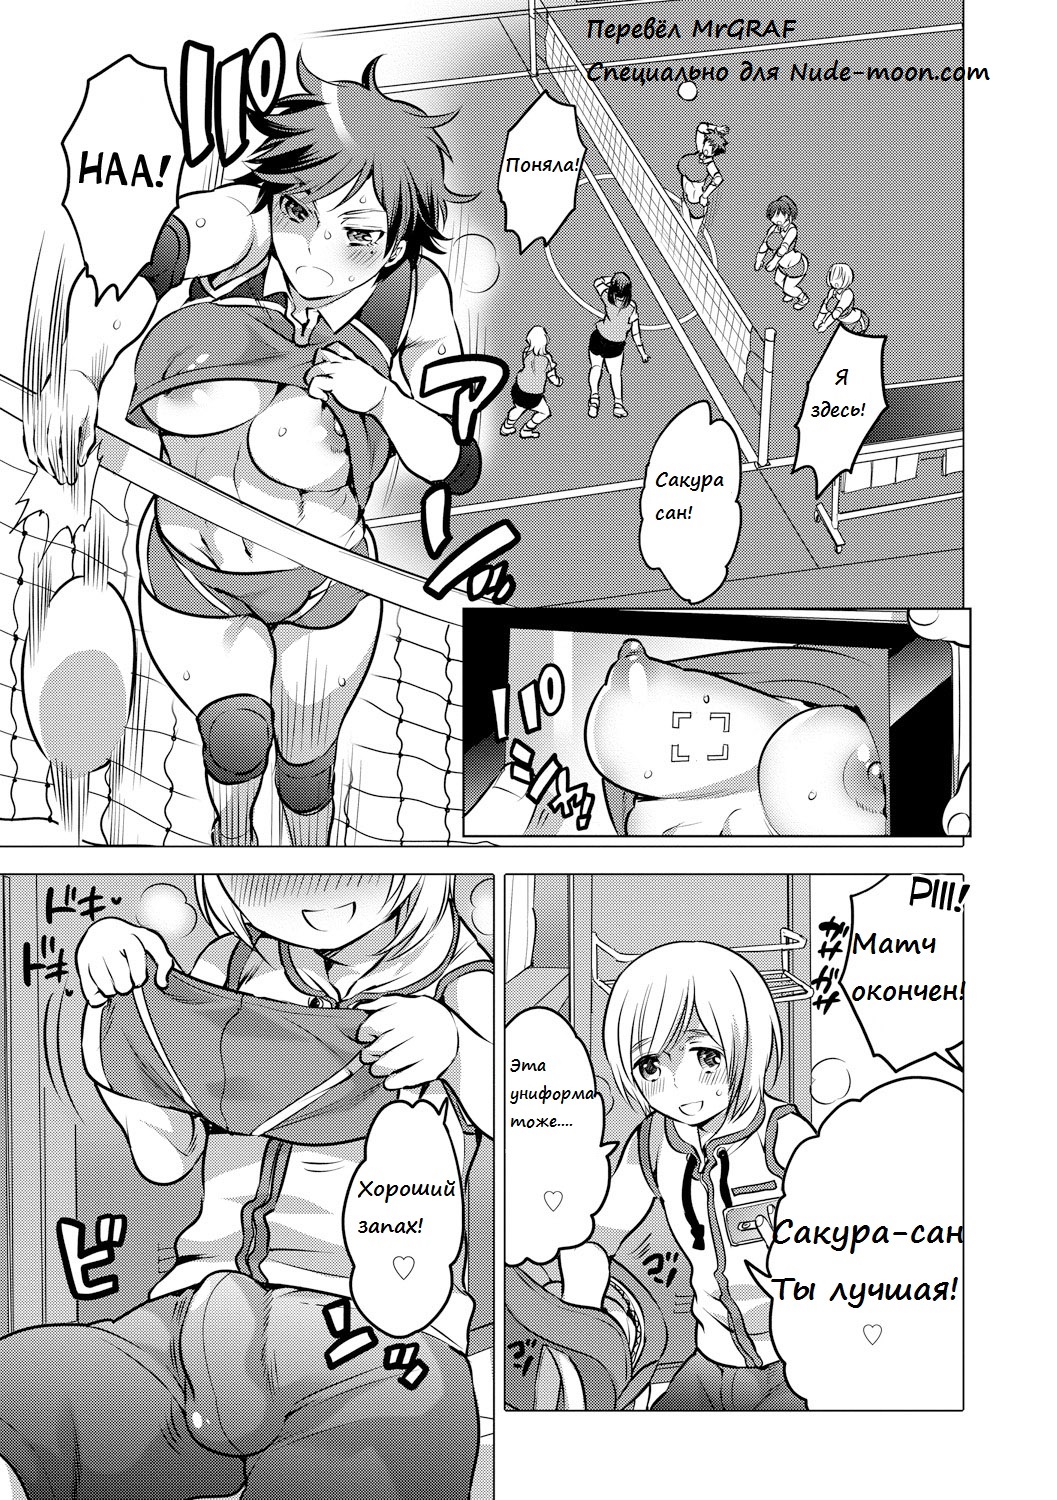 Shemale hentai manga